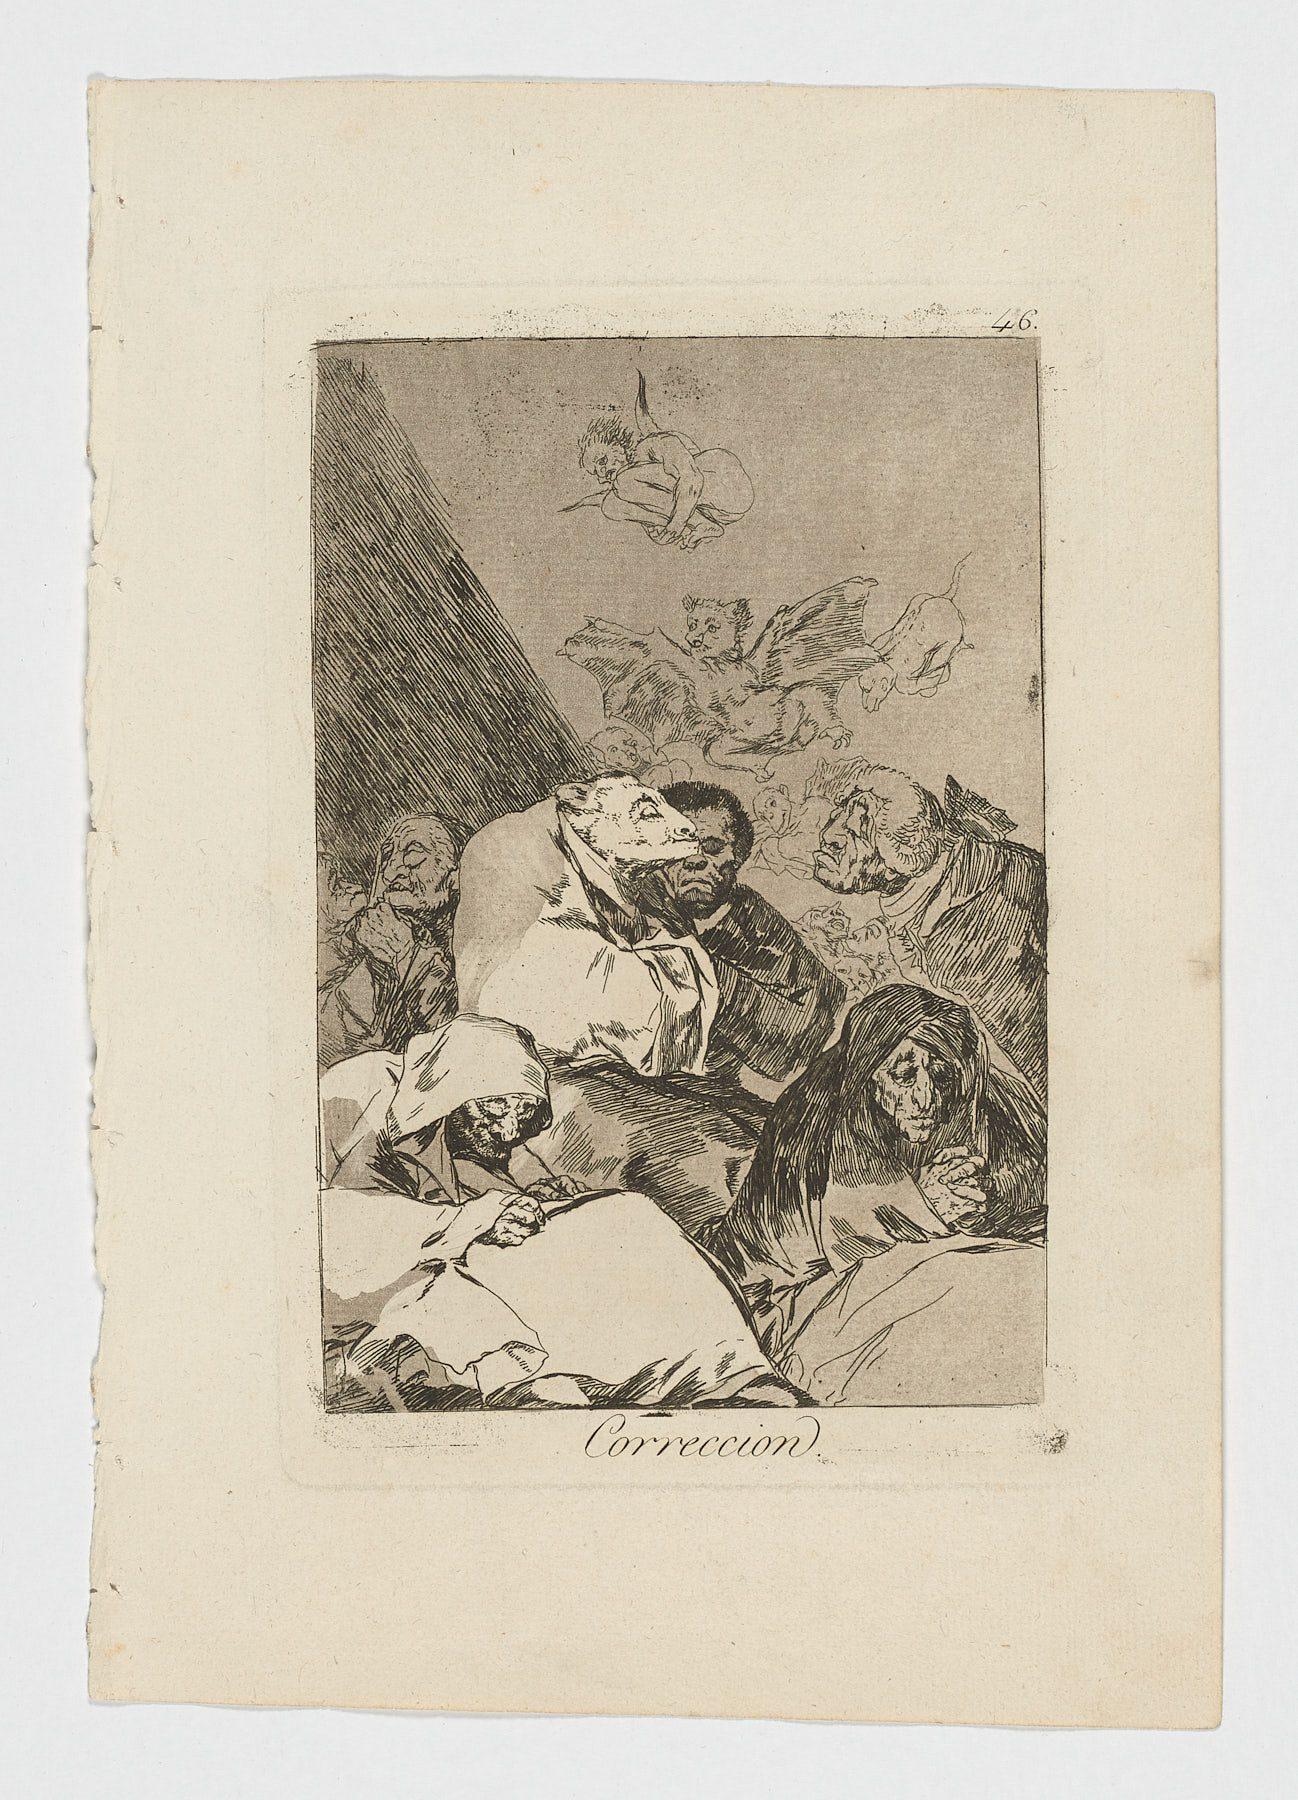 Francisco De Goya Caprichos Correccion 1ère édition d'impression d'art originale espagnol - Print de Francisco Goya